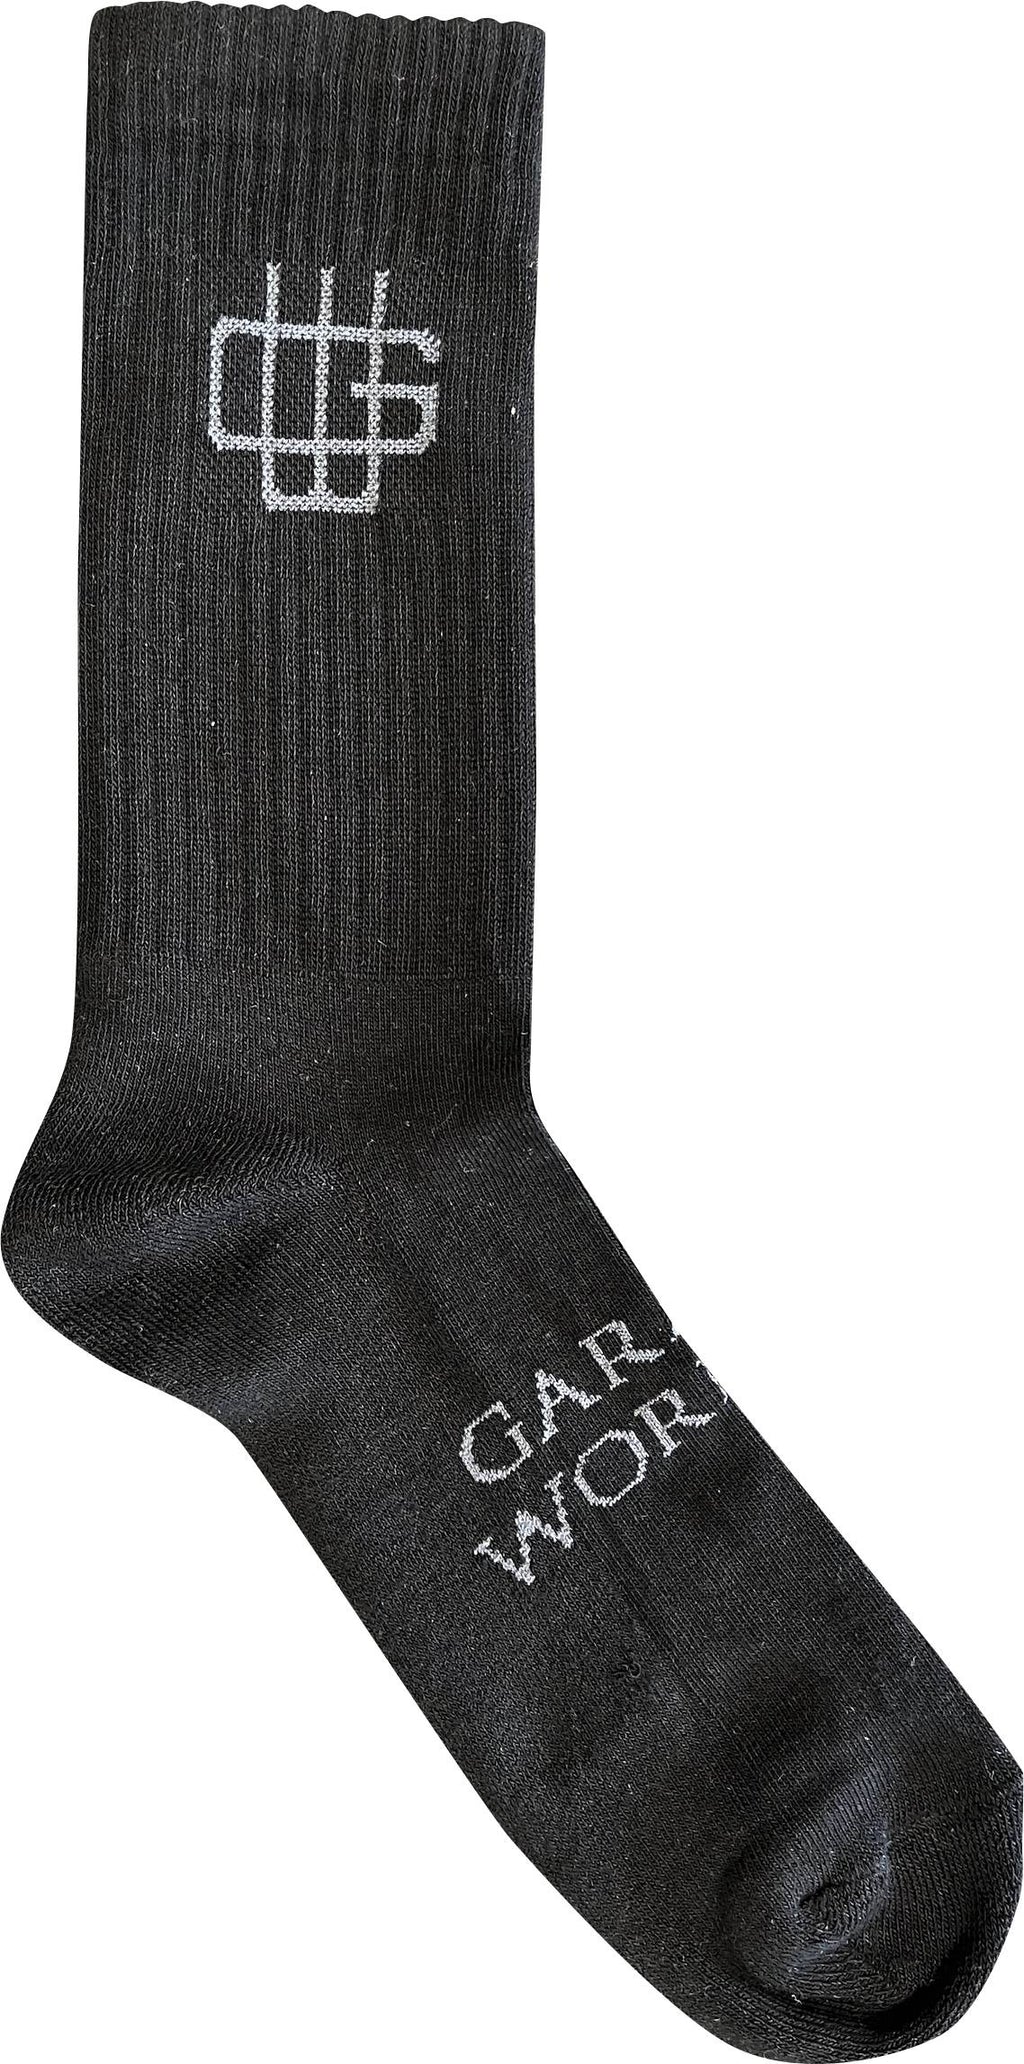  Garment Workshop Calze Socks Unisex Chaos Black Nero Uomo - 1